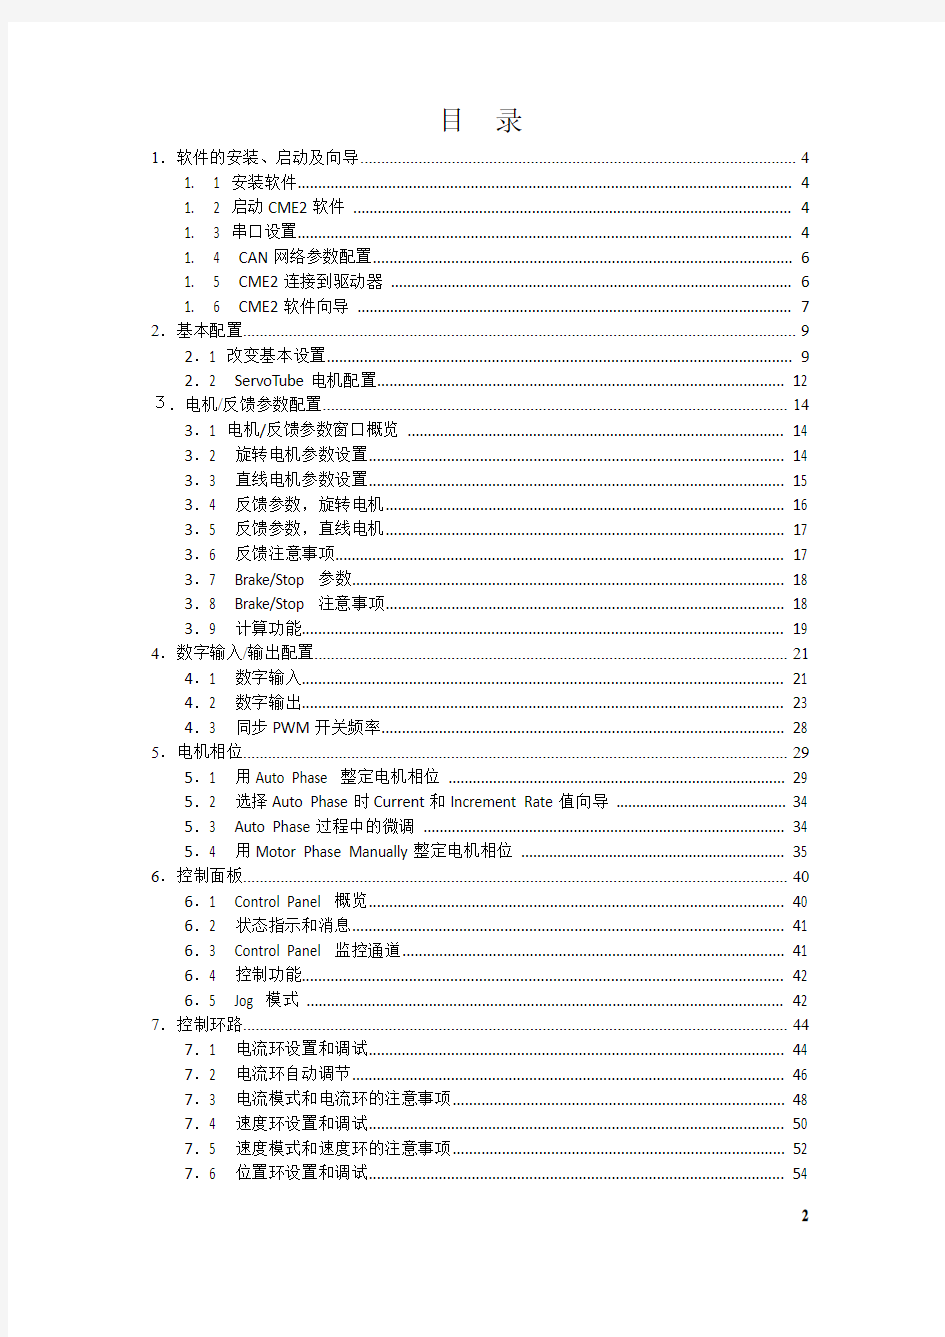 Copley_CME2手册--汉语